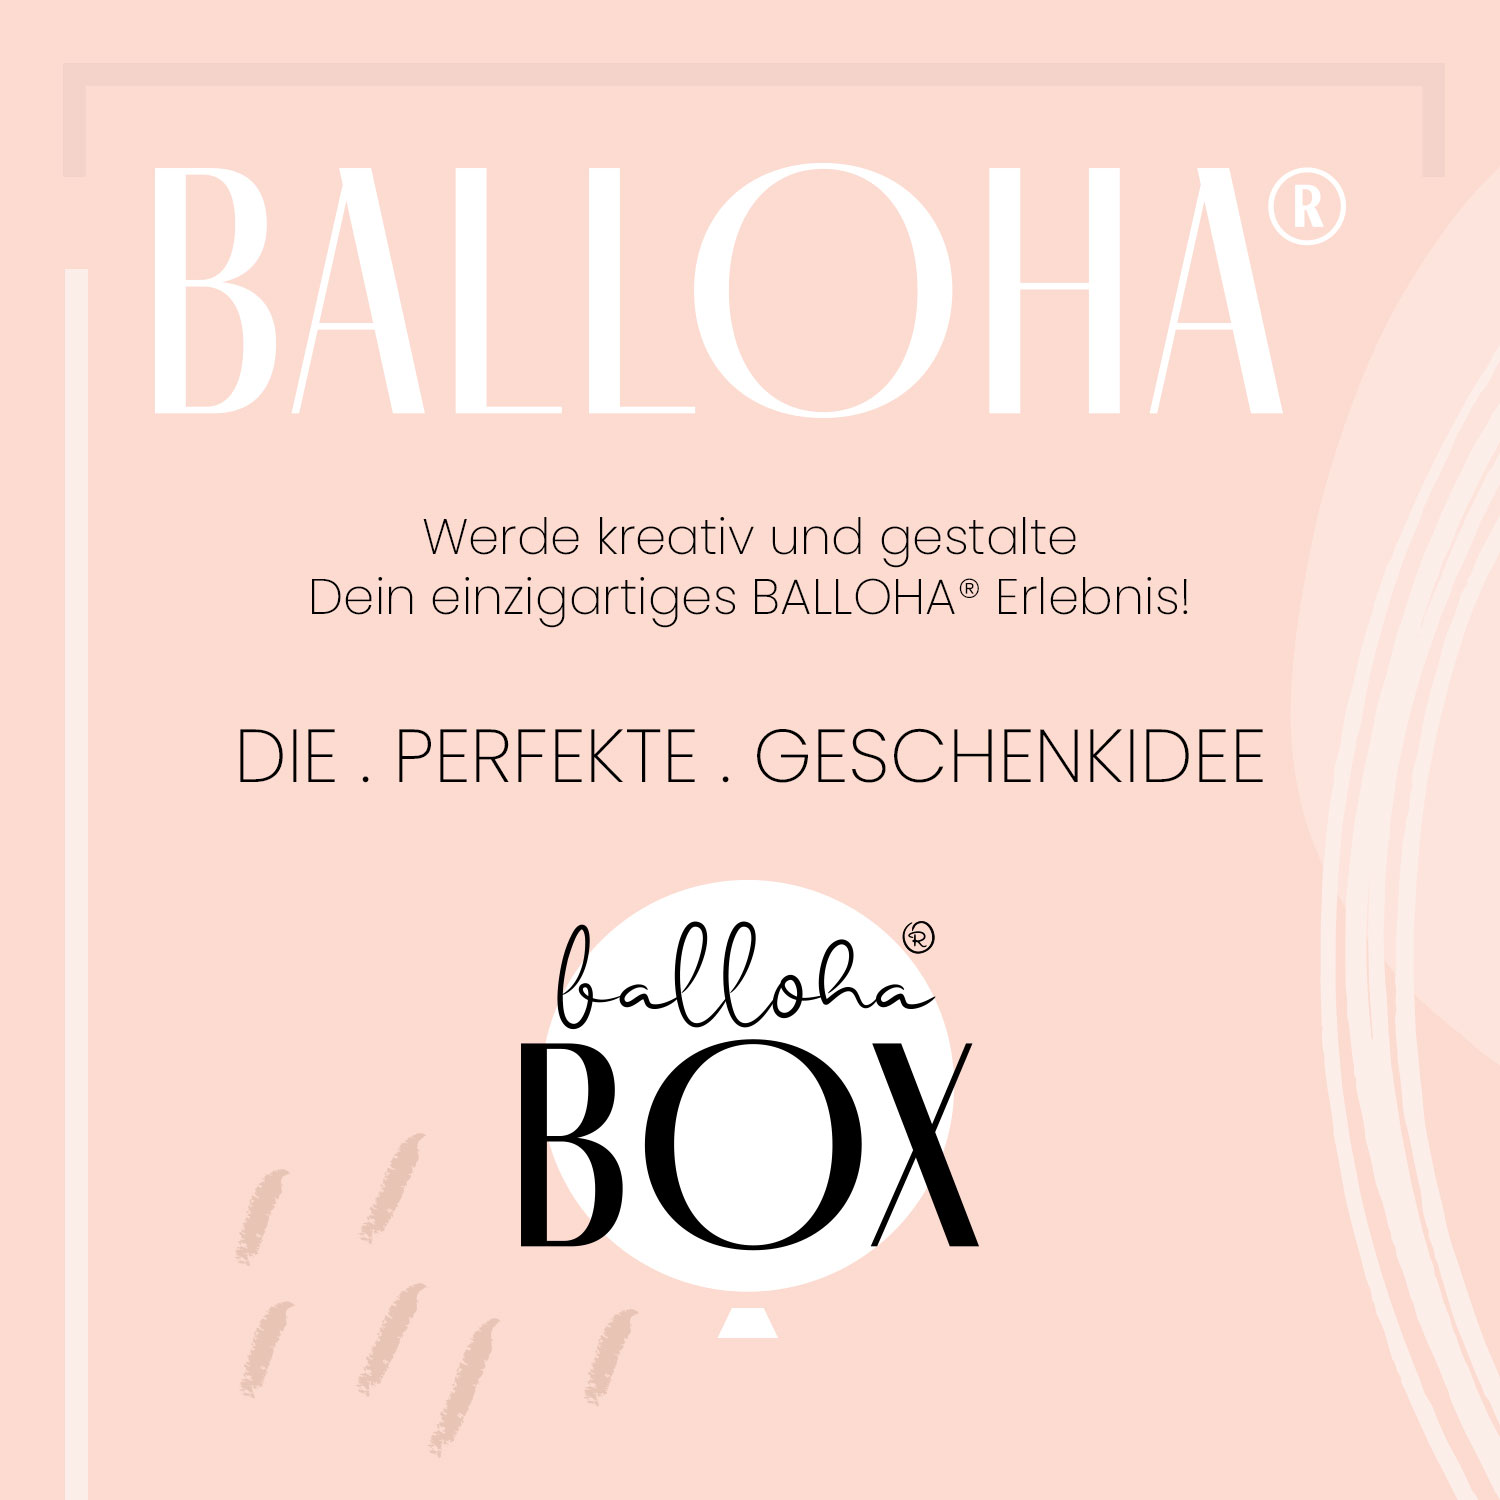 Balloha® Box mit Personalisierung - DIY Birthday Smooth Watercolour